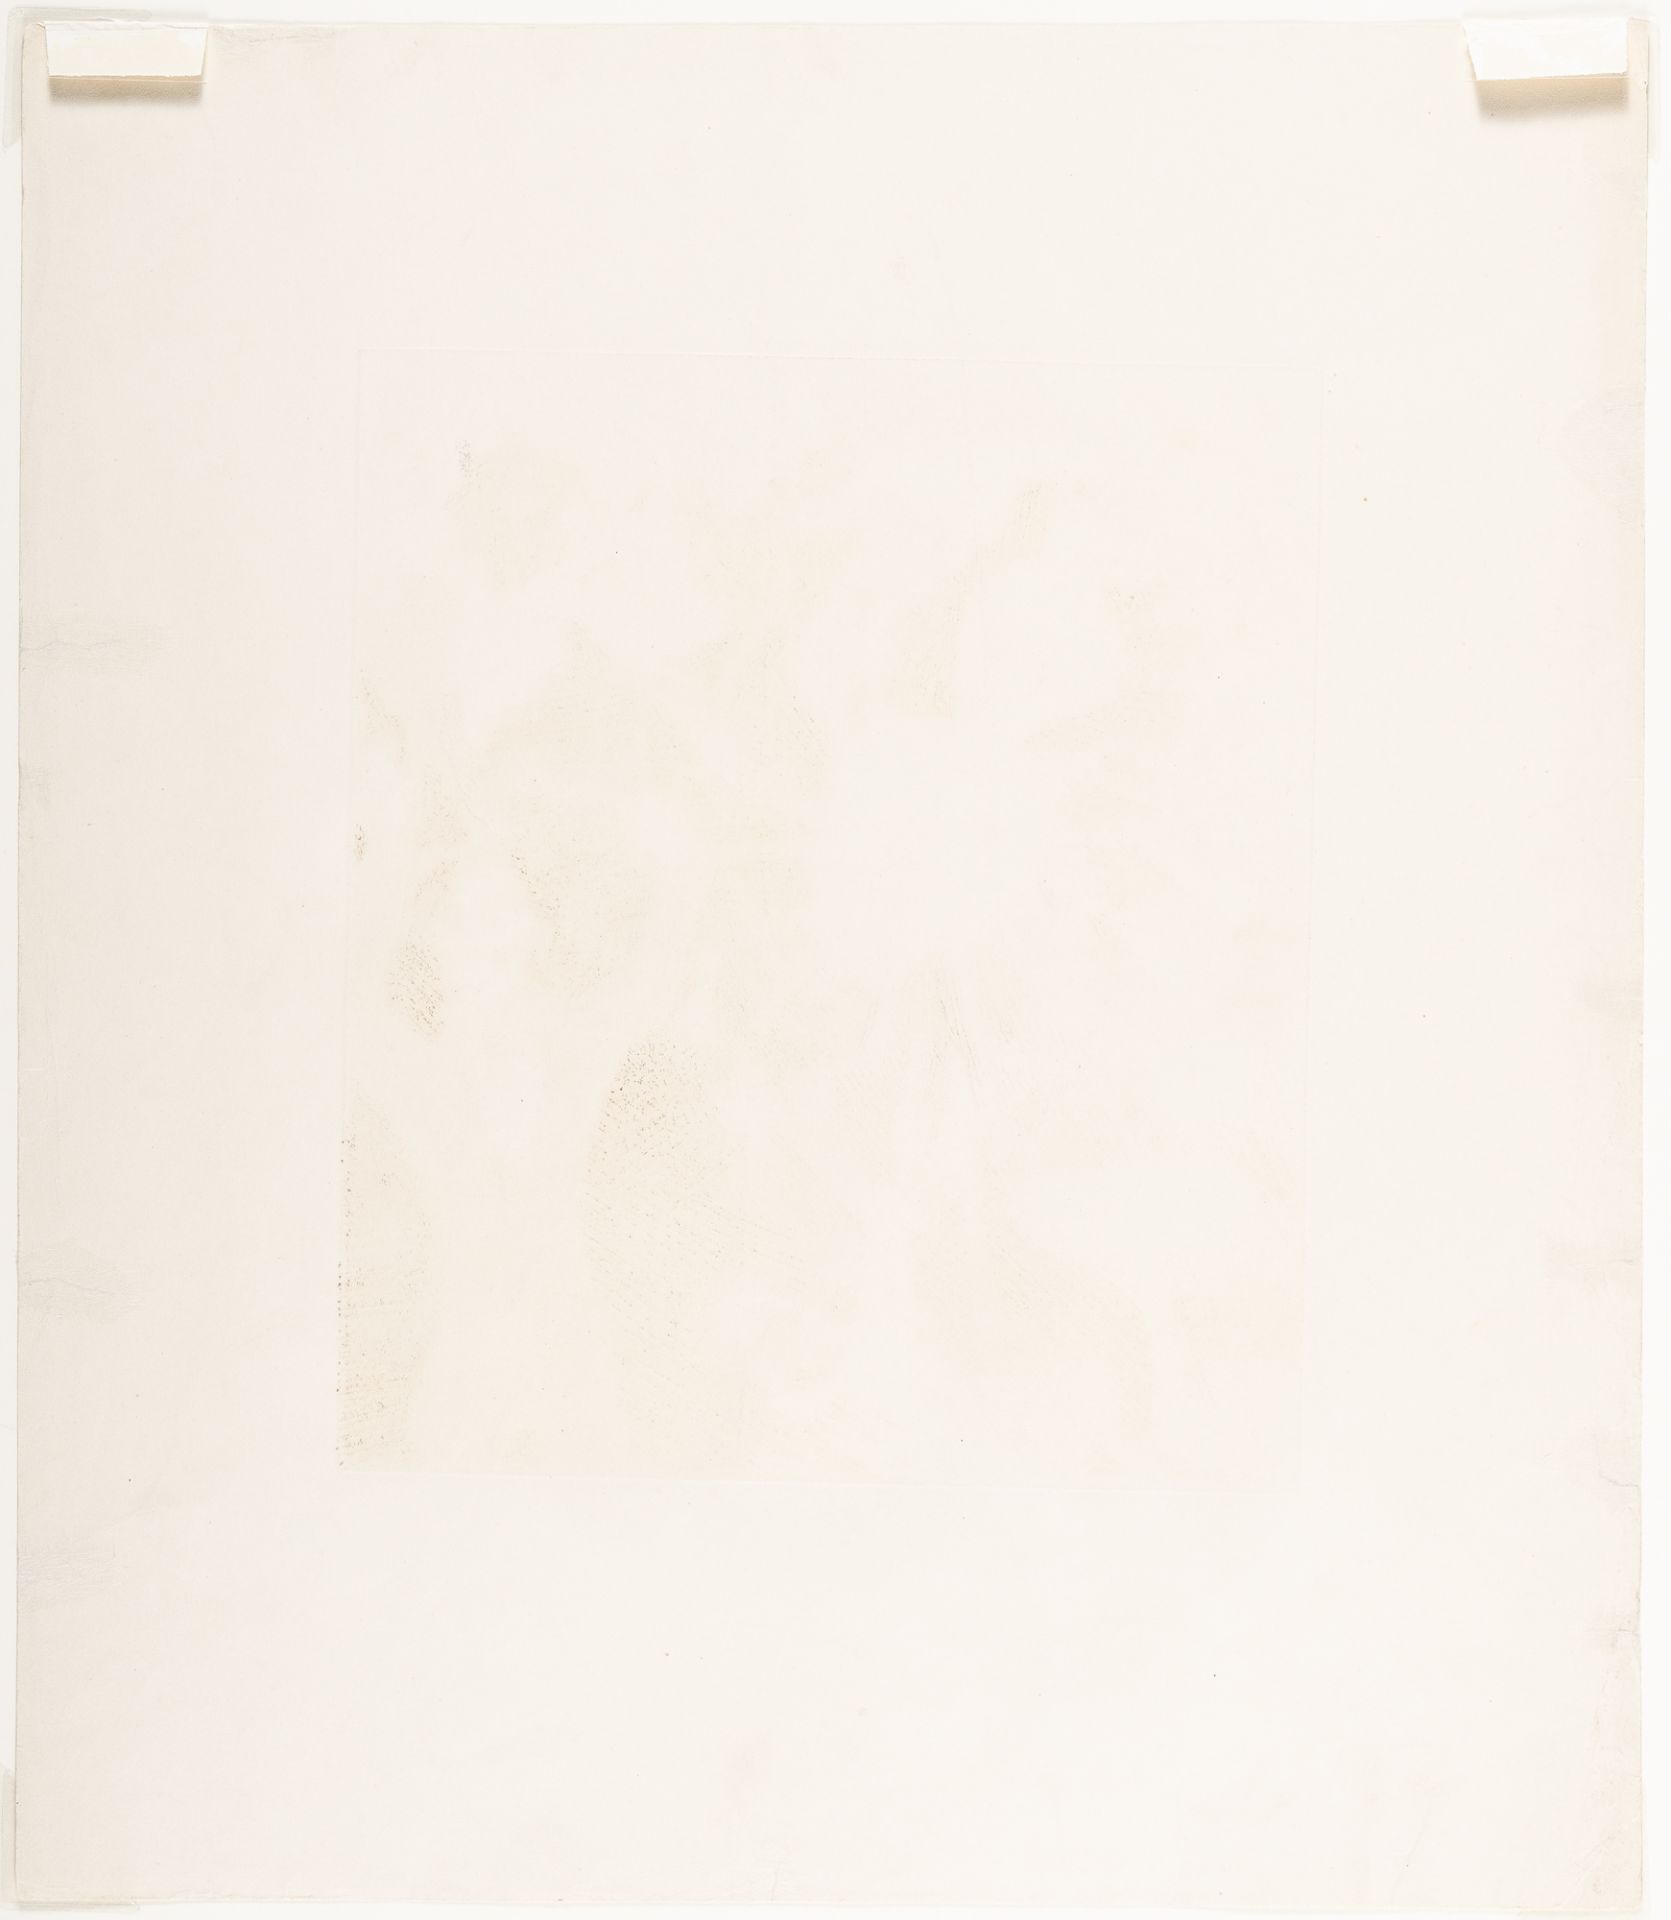 Otto Dix (1891 Untermhaus bei Gera - Singen 1969) – „Illusionsakt“ (“Illusion Act”) - Bild 3 aus 3